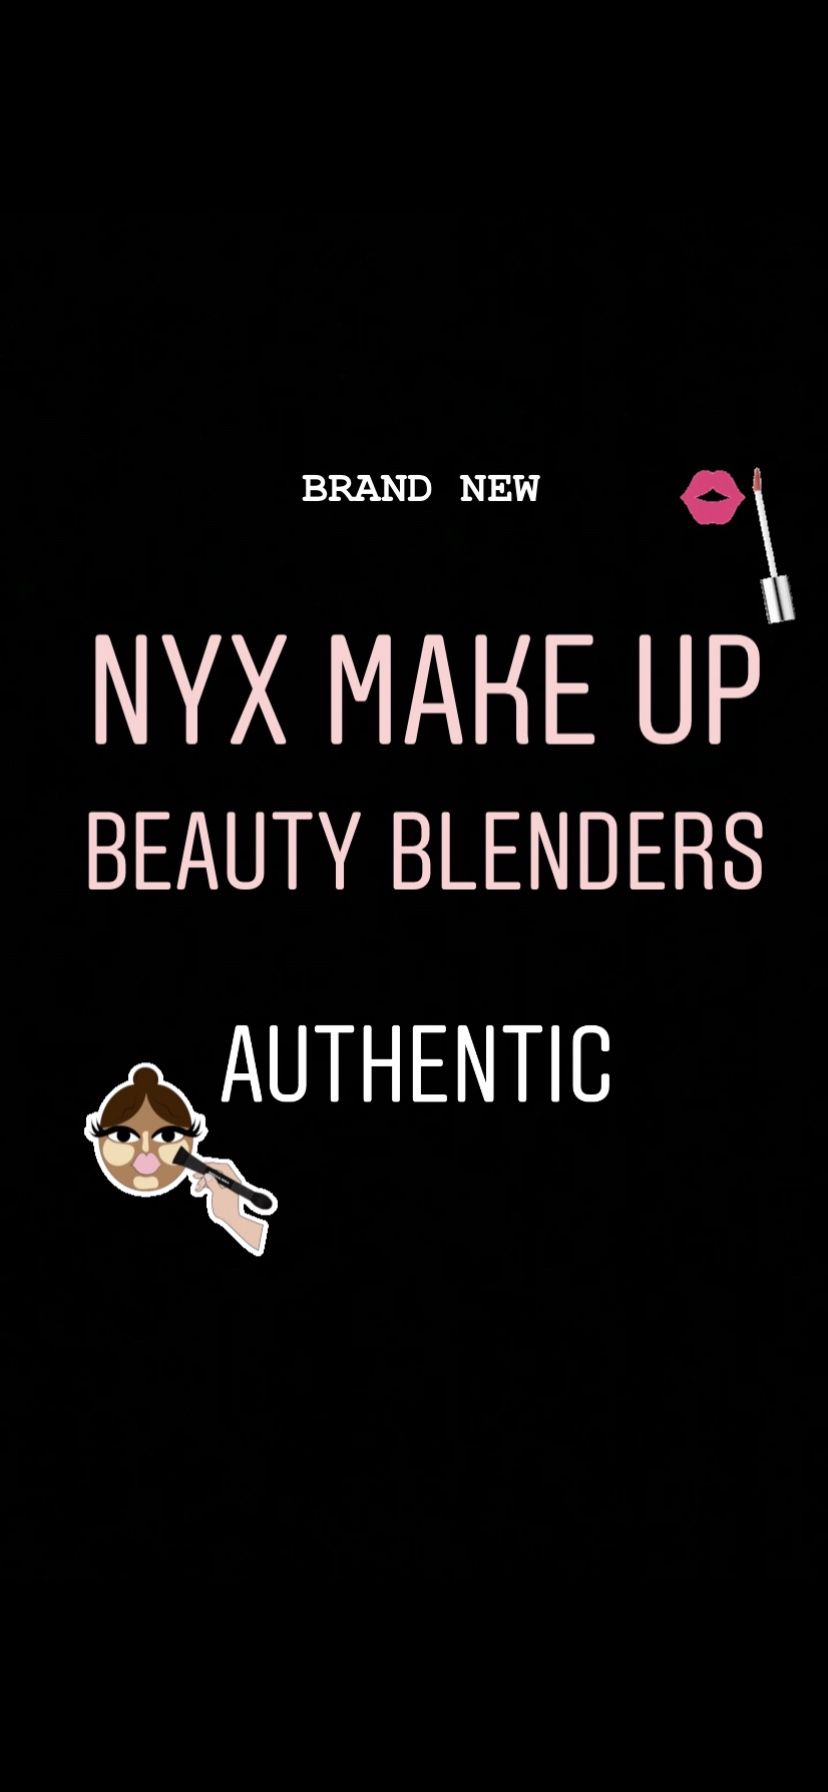 Beauty Blender and NYX make up